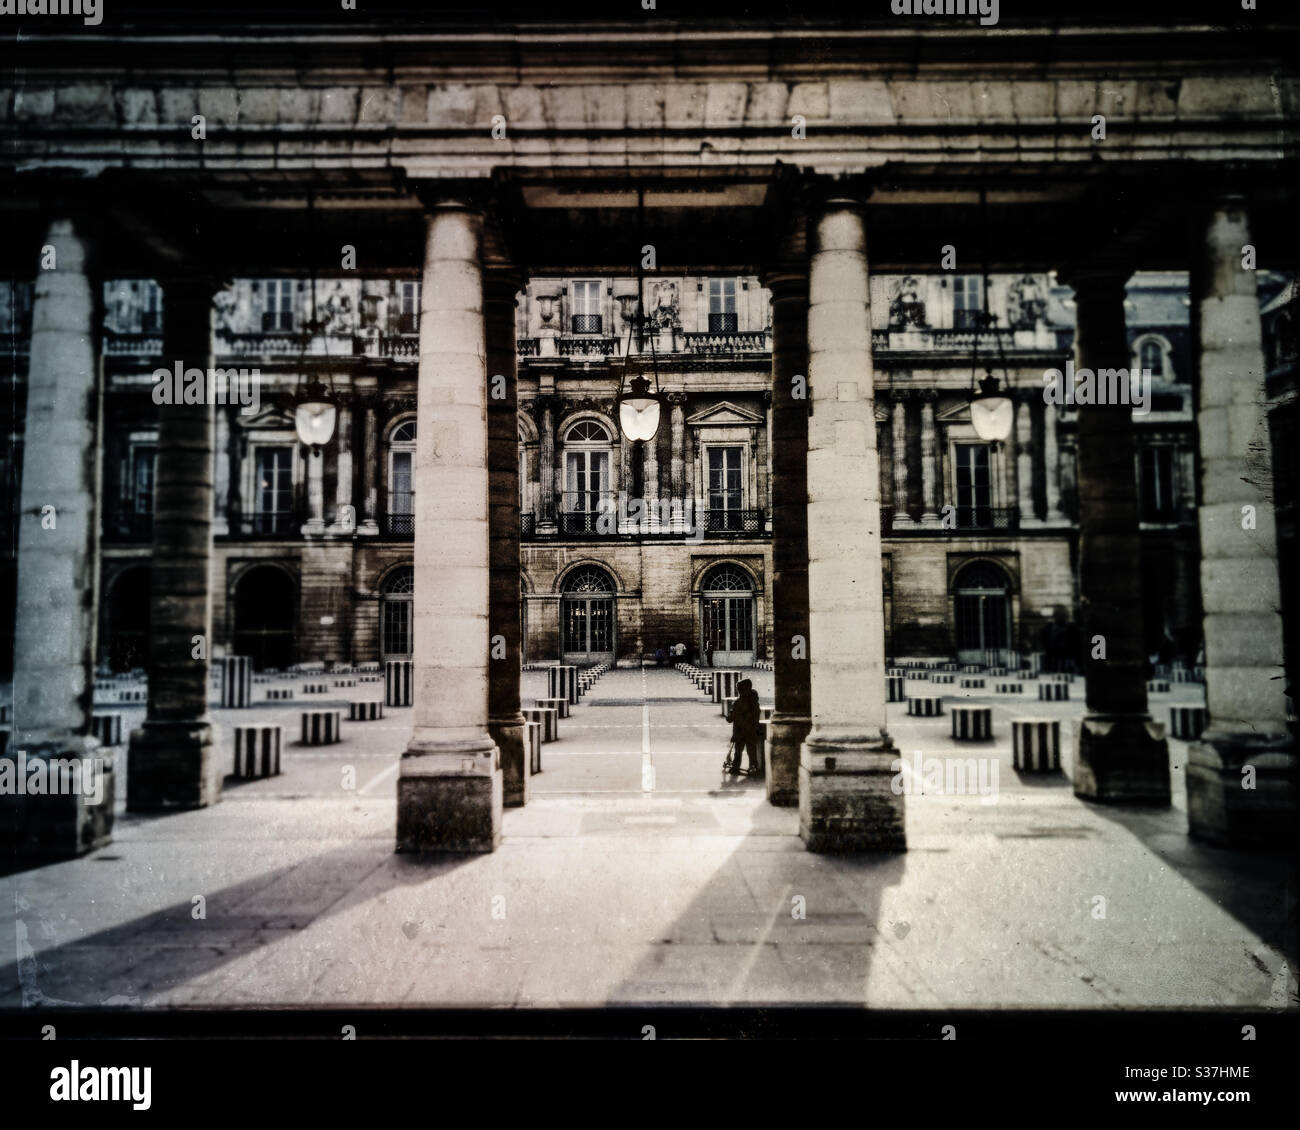 Les Deux Plateaus. Die Colonnes de Buren. Im Inneren des Palais Royal, am Cour d'Honneur, prachtvoller Palast, der im 17. Jahrhundert für Richelieu erbaut wurde. Buren Spalten Stockfoto